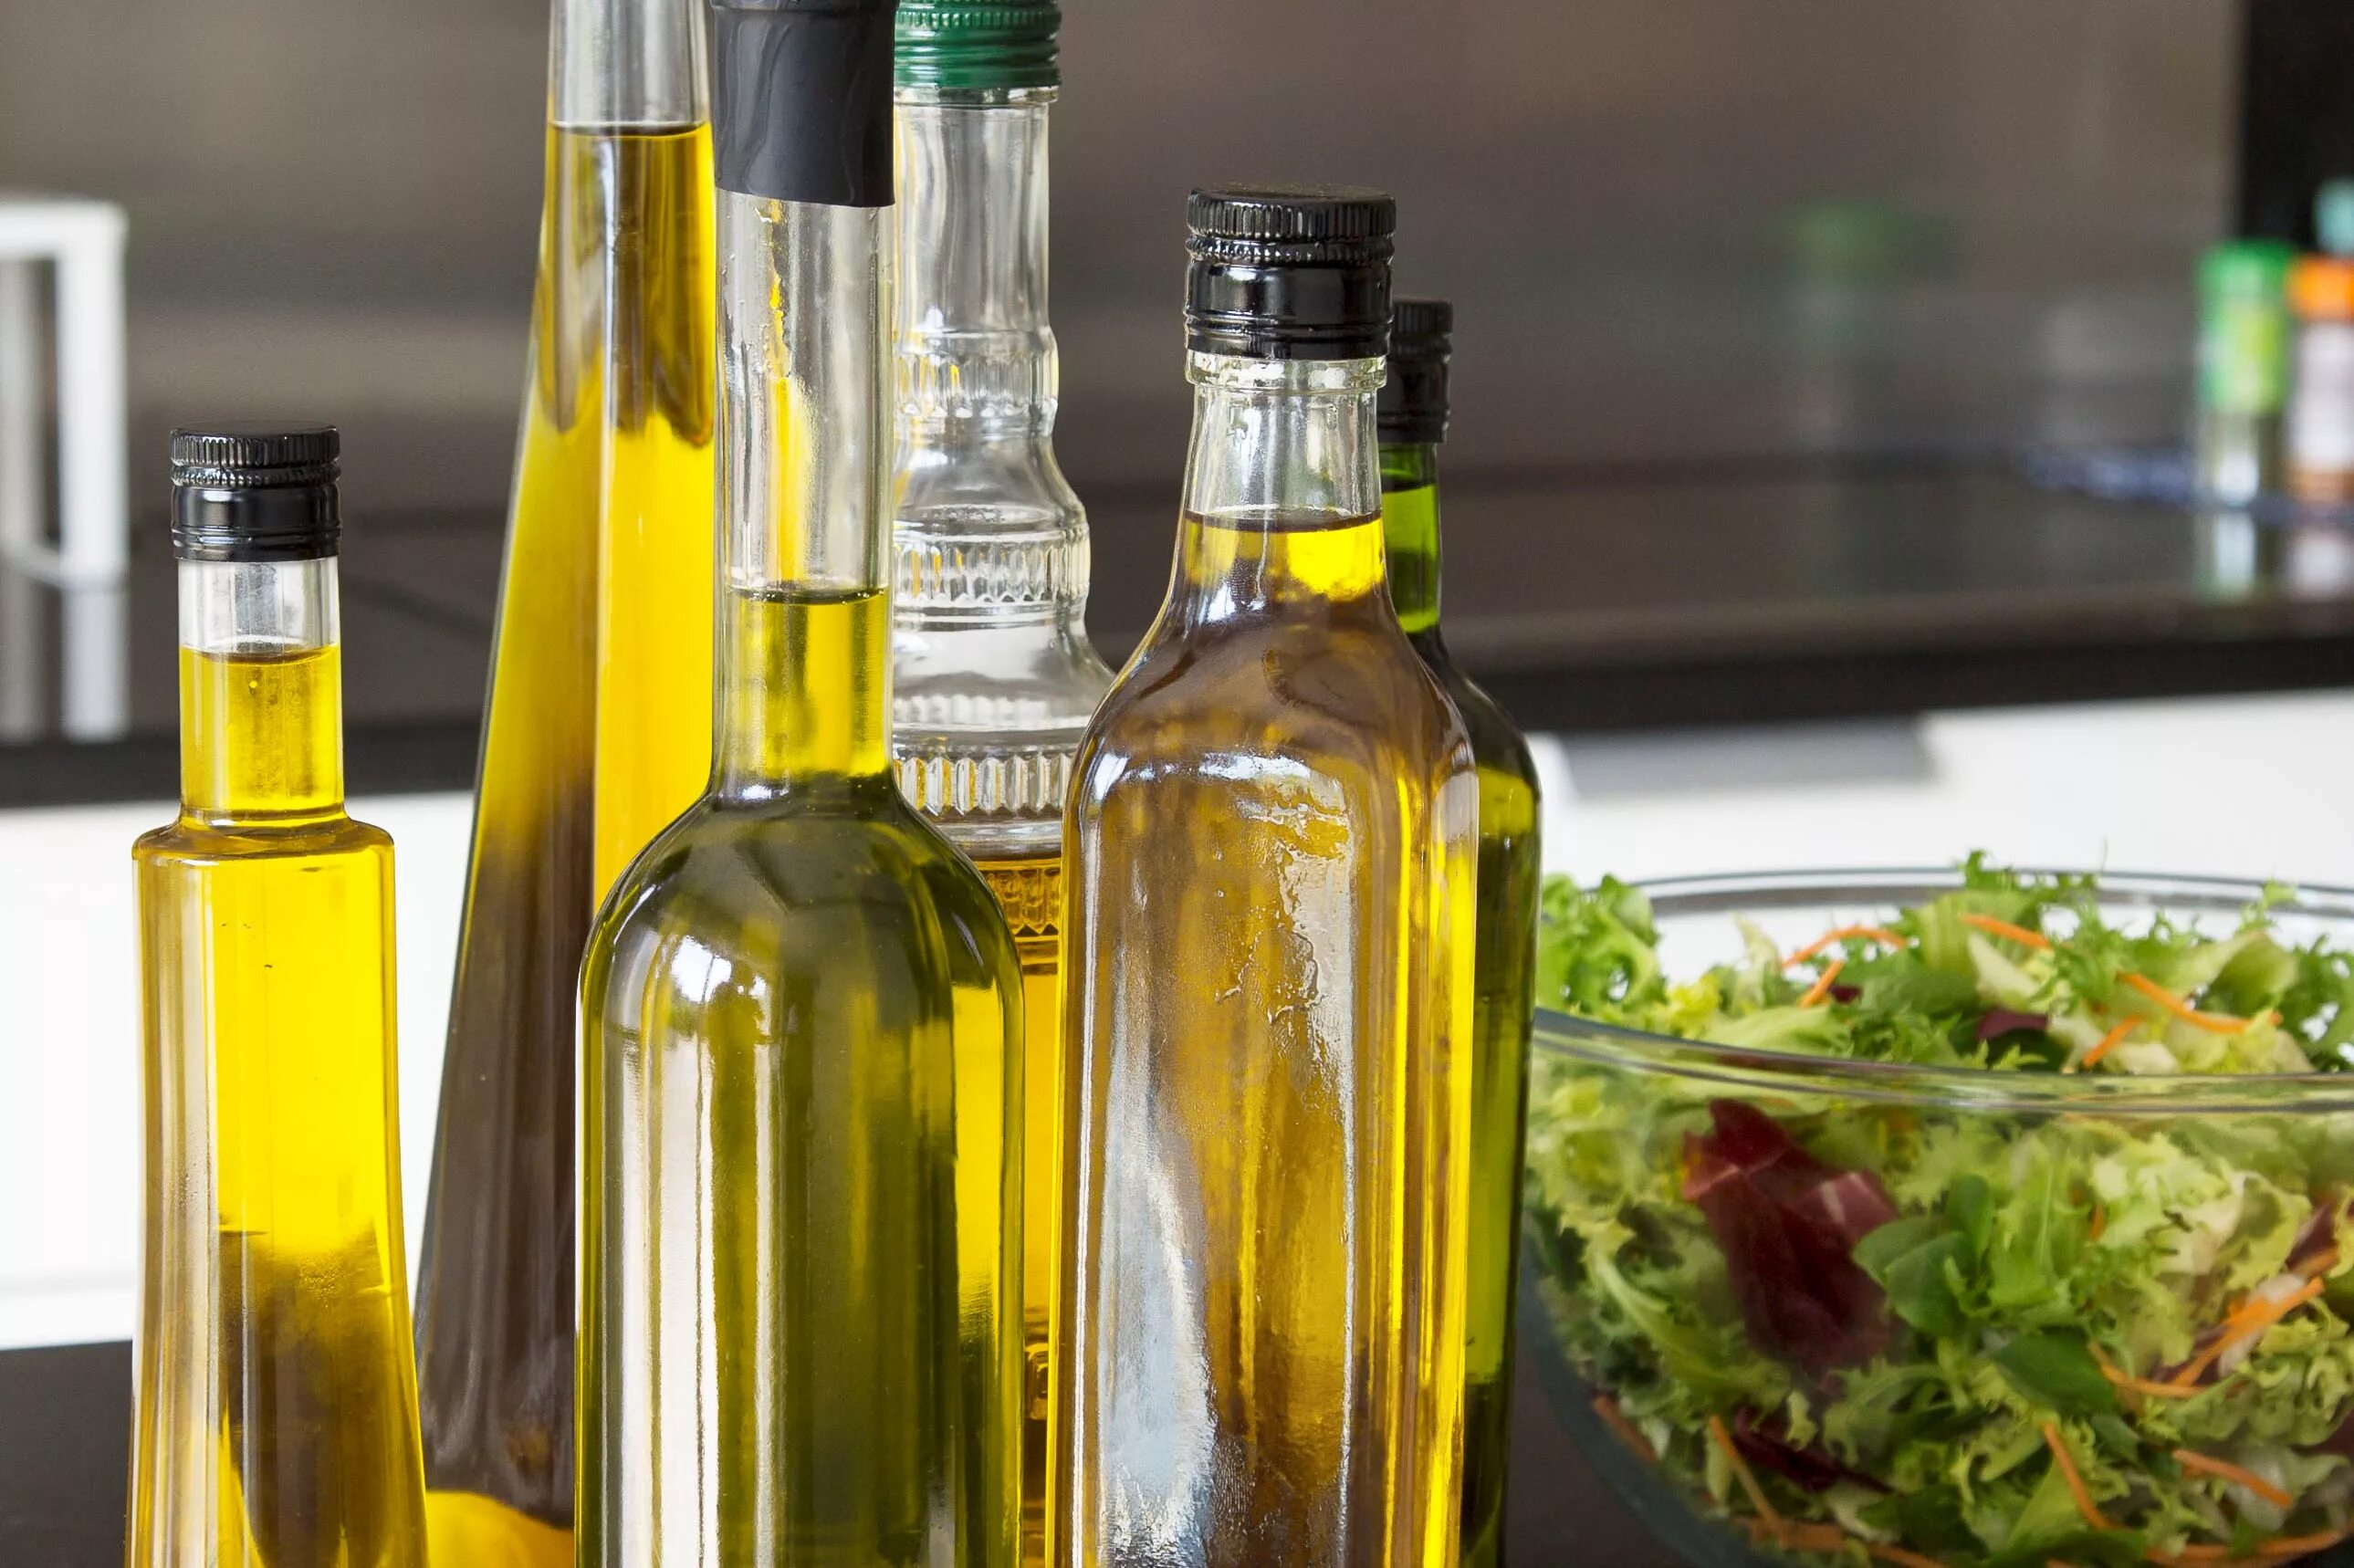 Оливковое масло Испания. Испанское оливковое масло. Растительное масло. Оливковое масло производители. Зачем оливковое масло